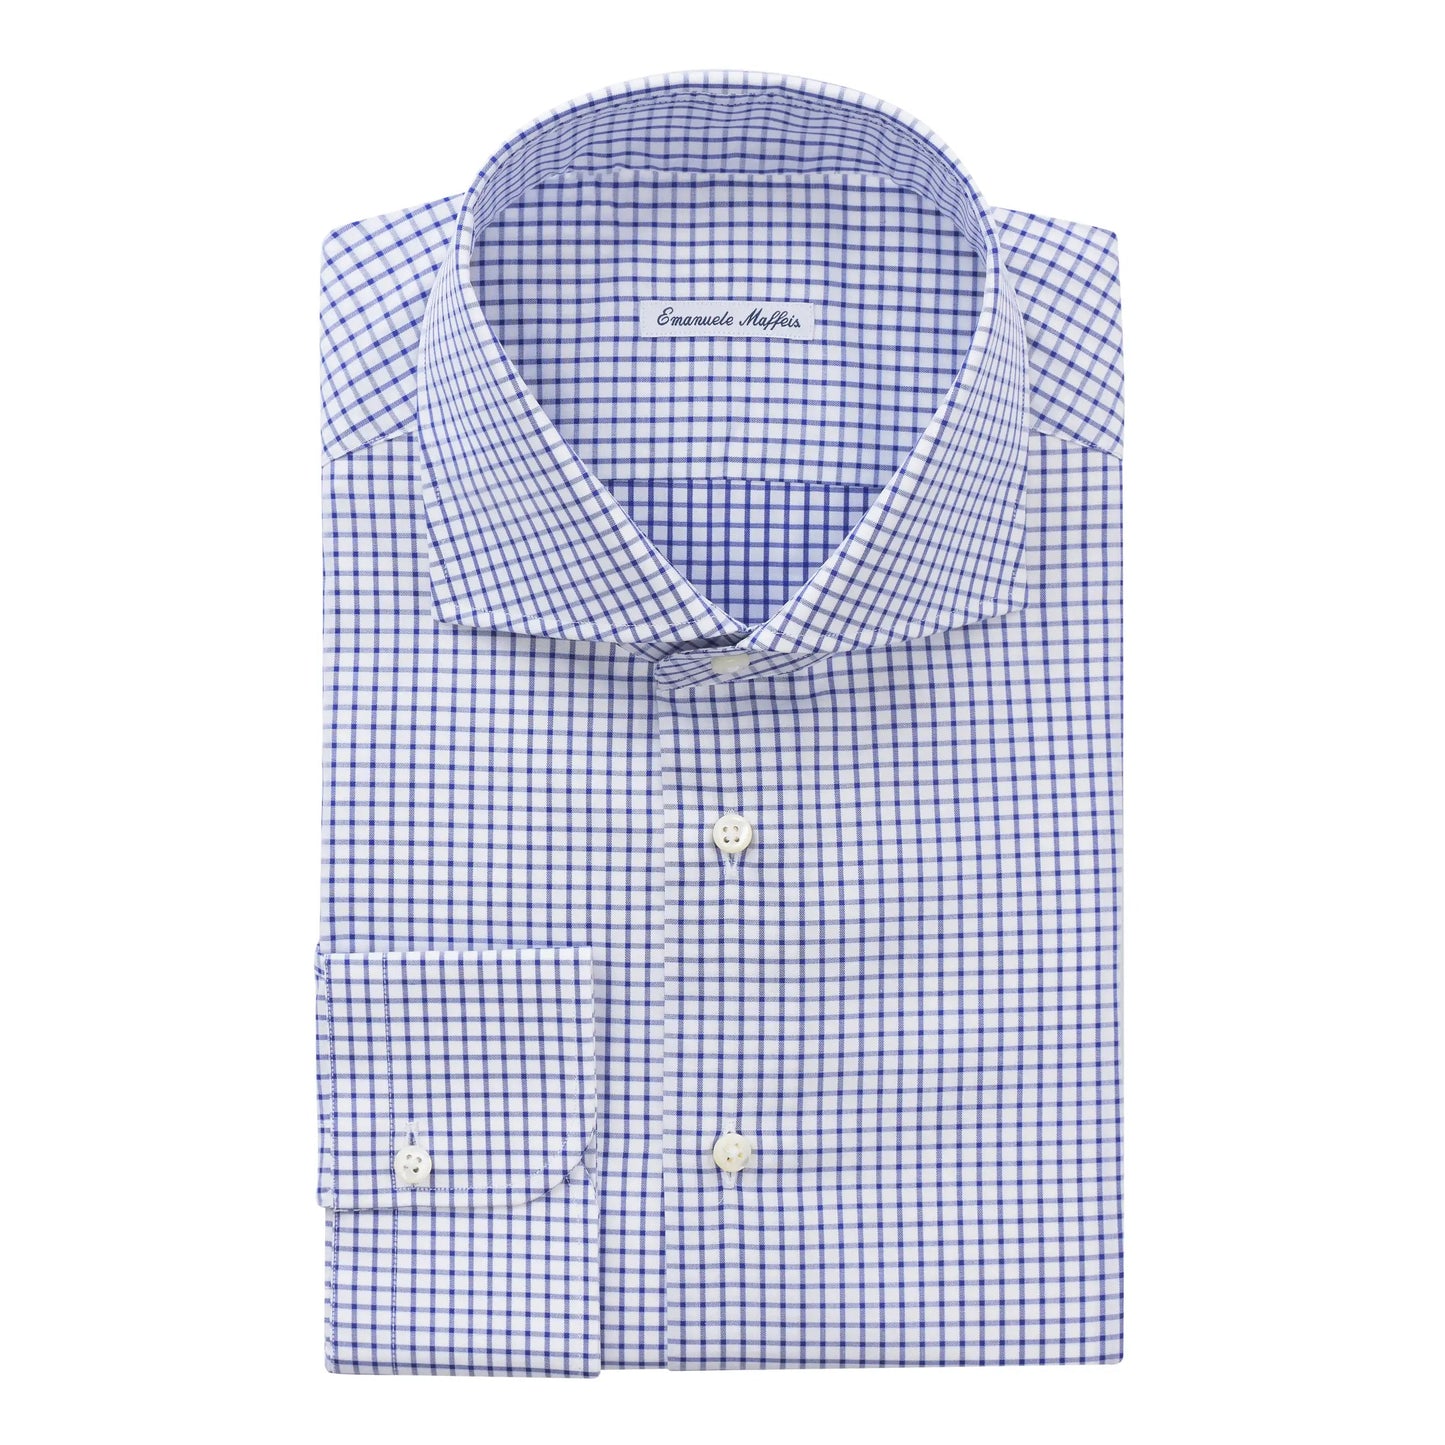 Emanuele Maffeis Finest Cotton Checked Blue Shirt with Cutaway Collar - SARTALE